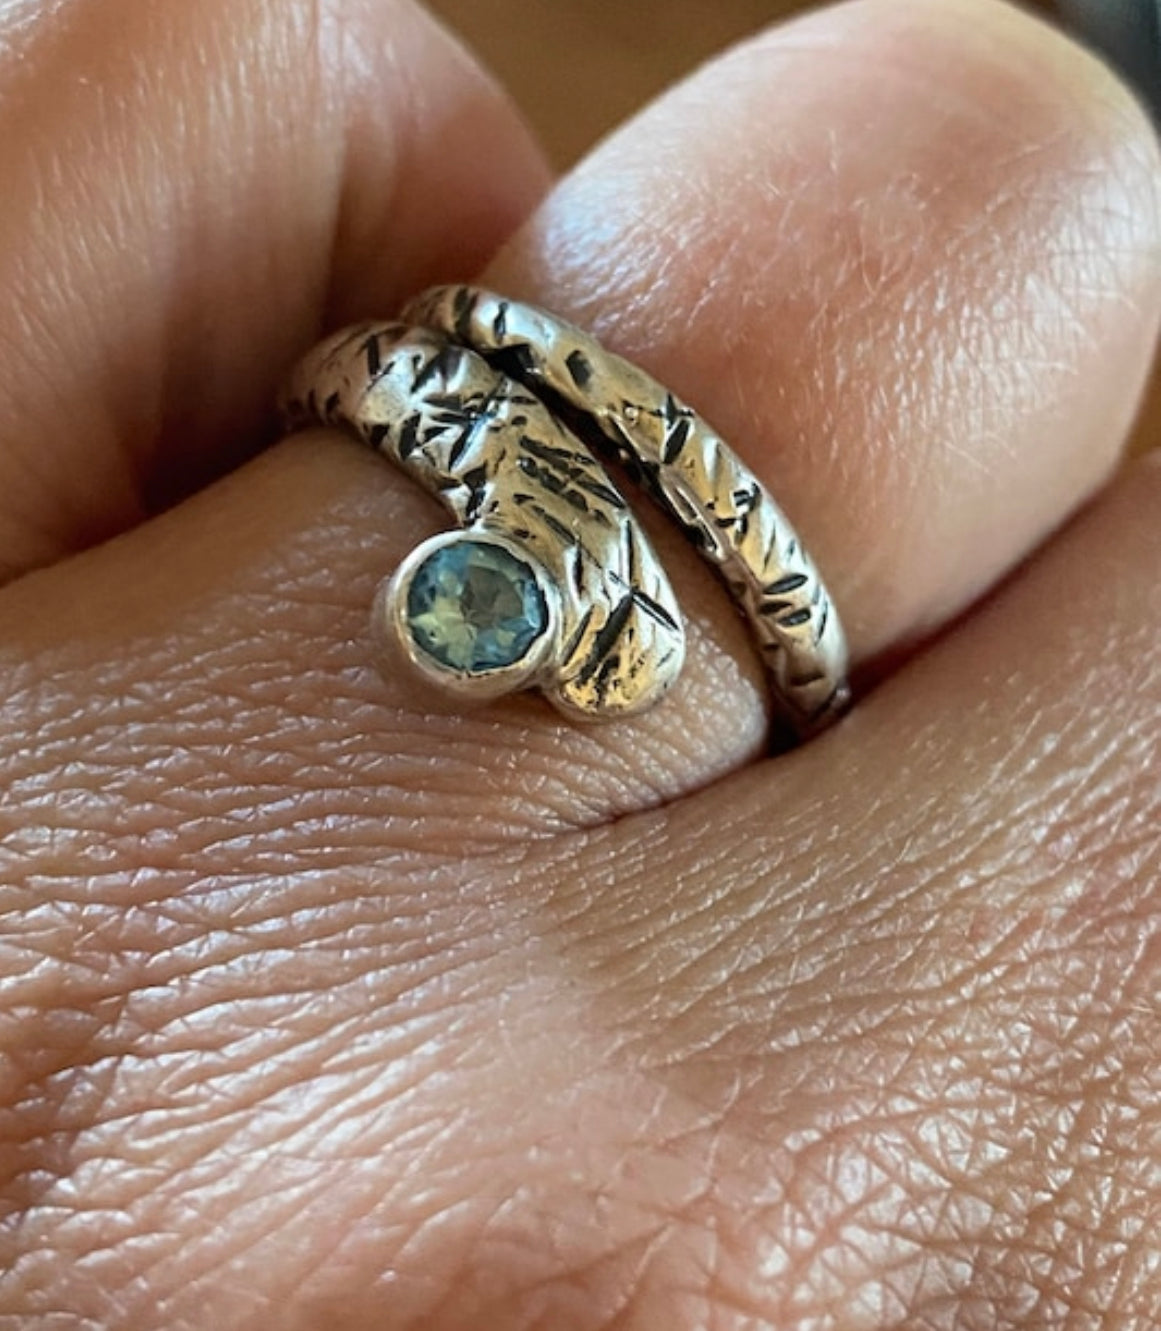 silver spiral ring, blue topaz ring